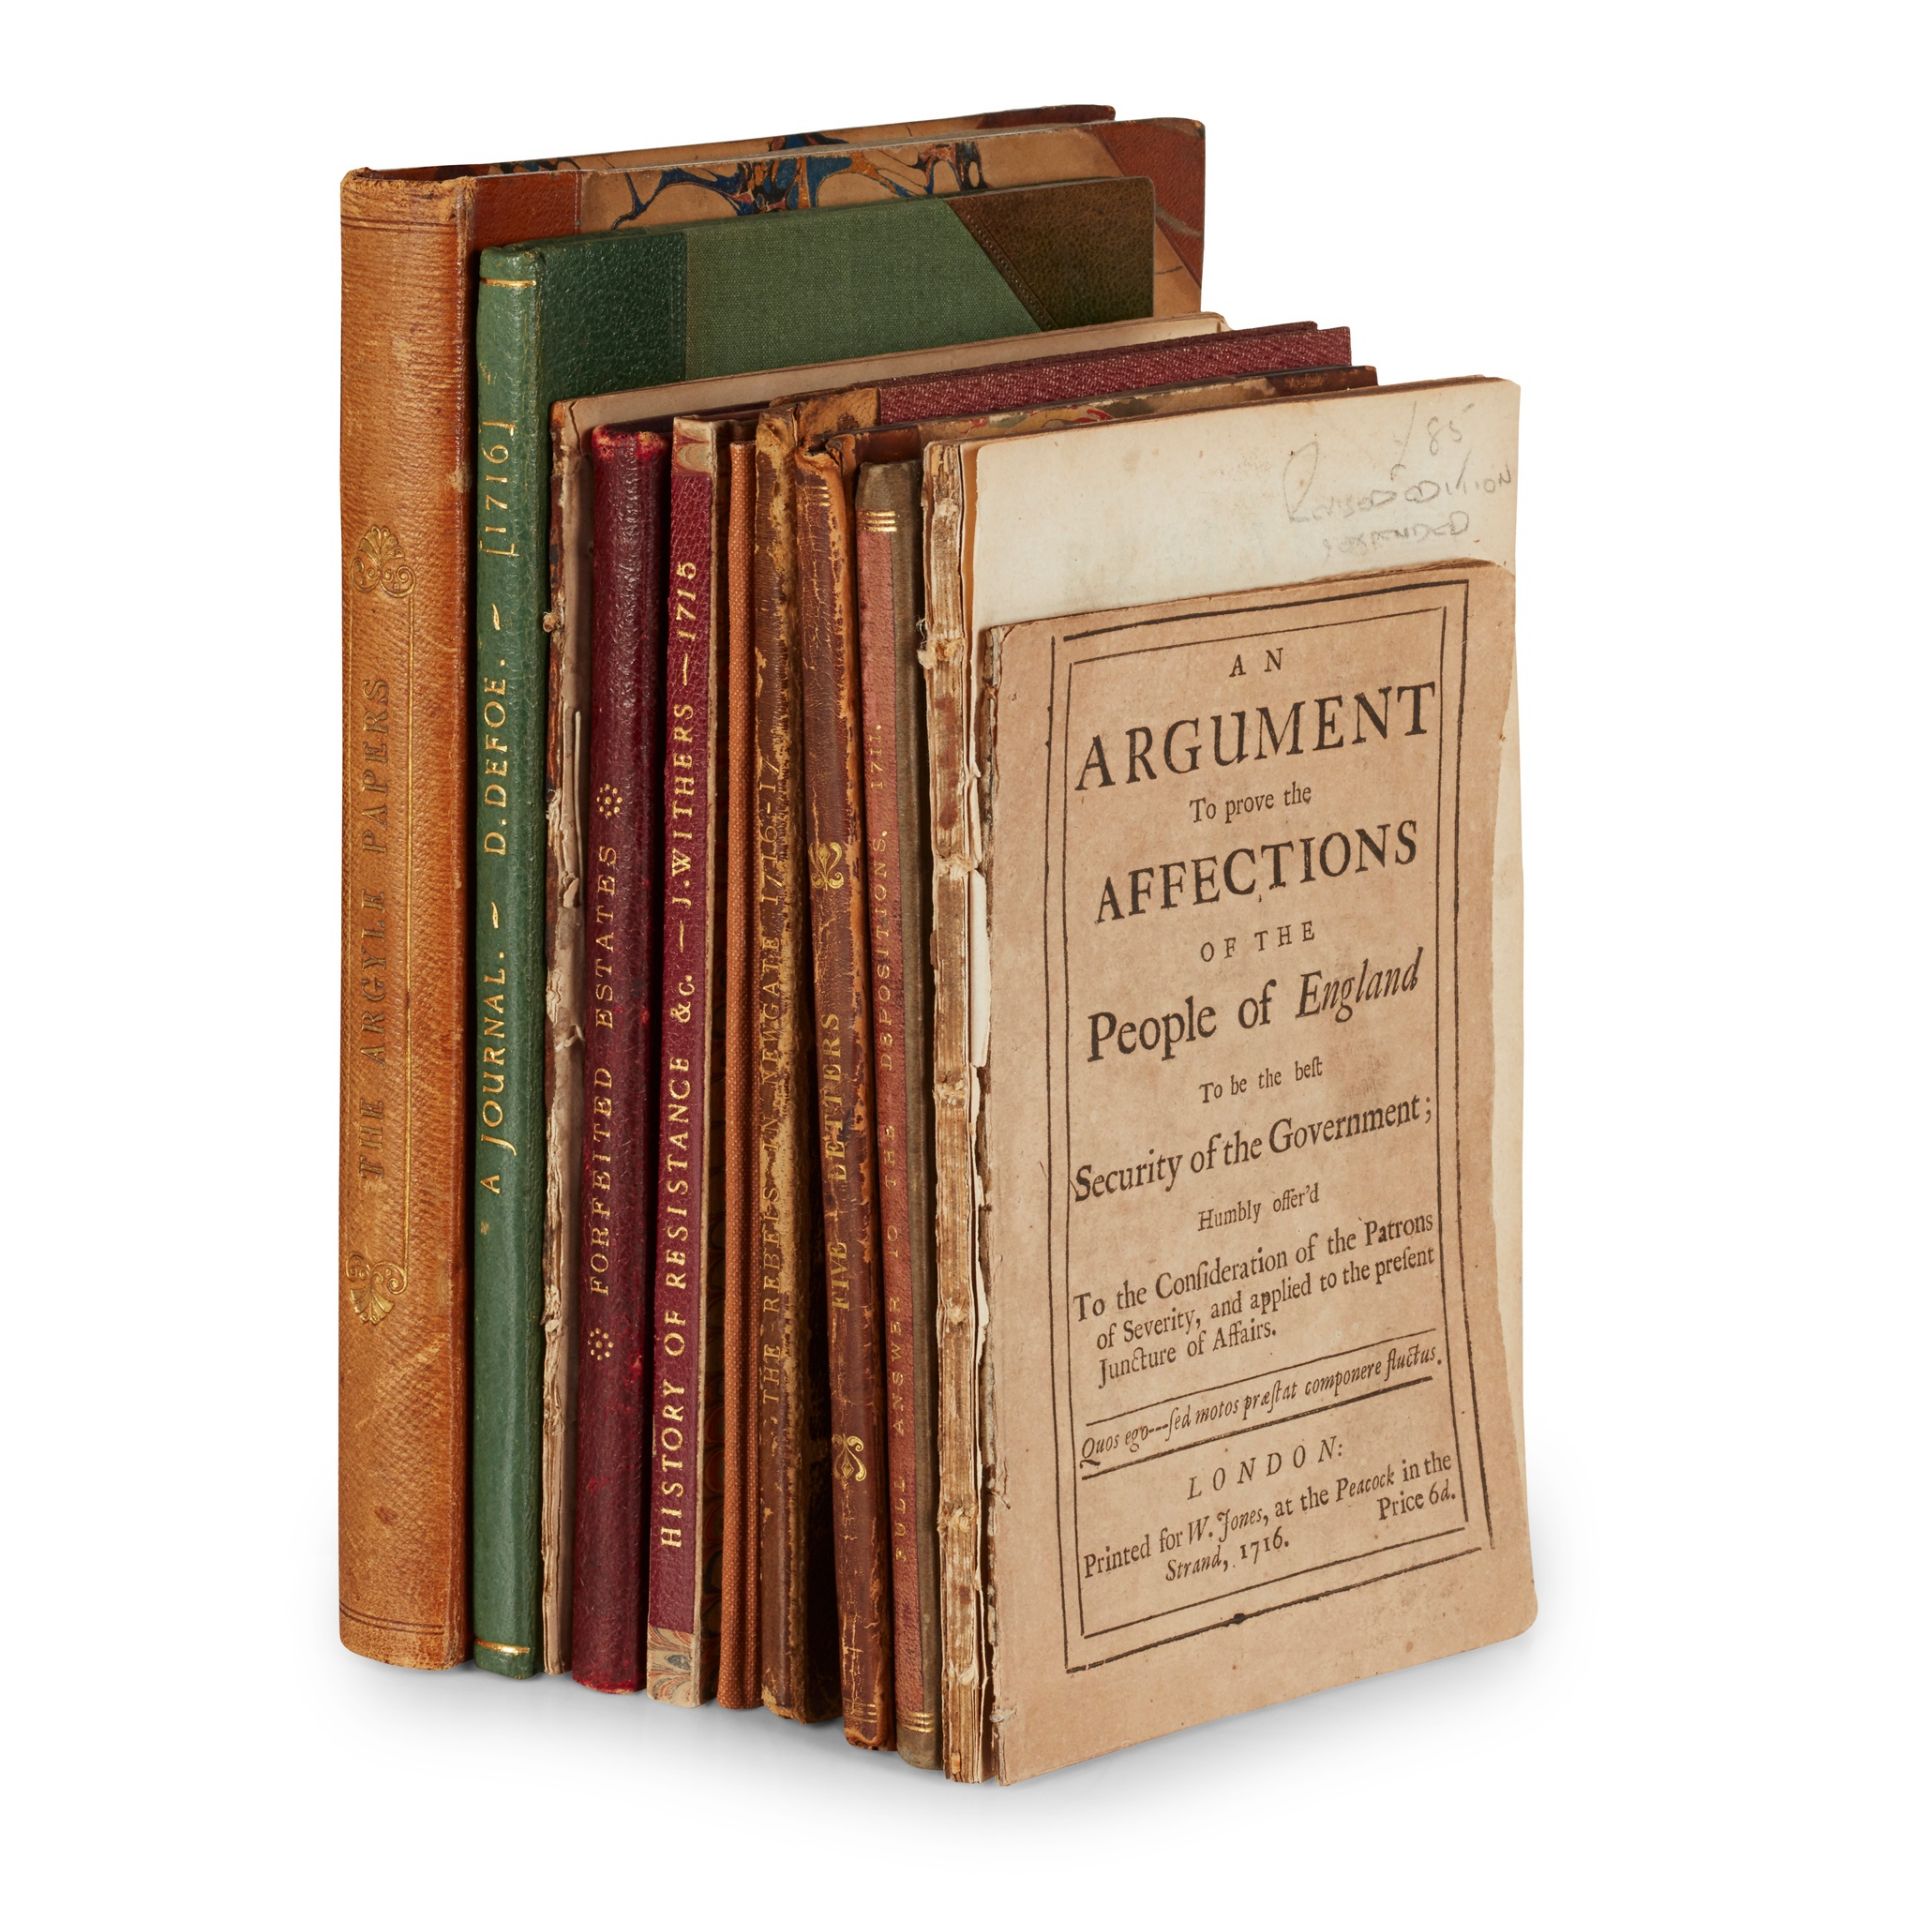 Jacobite Rising of 1715, 11 volumes comprising